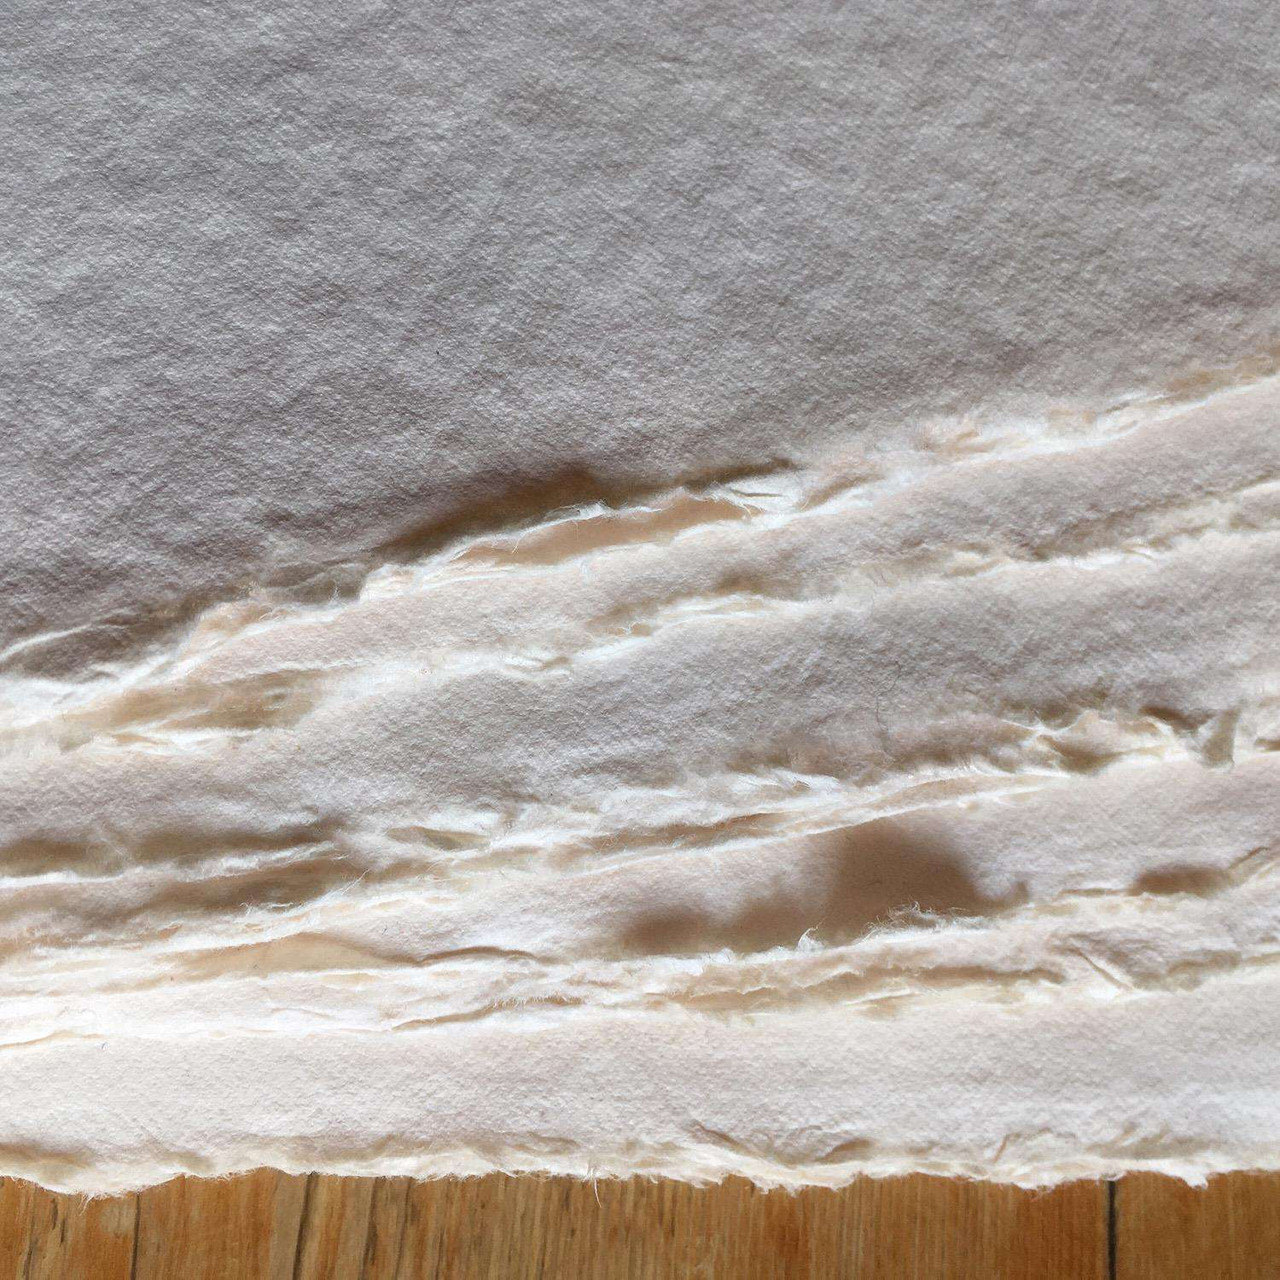 Artway Handmade Cotton Rag Paper: Authentic Craftsmanship